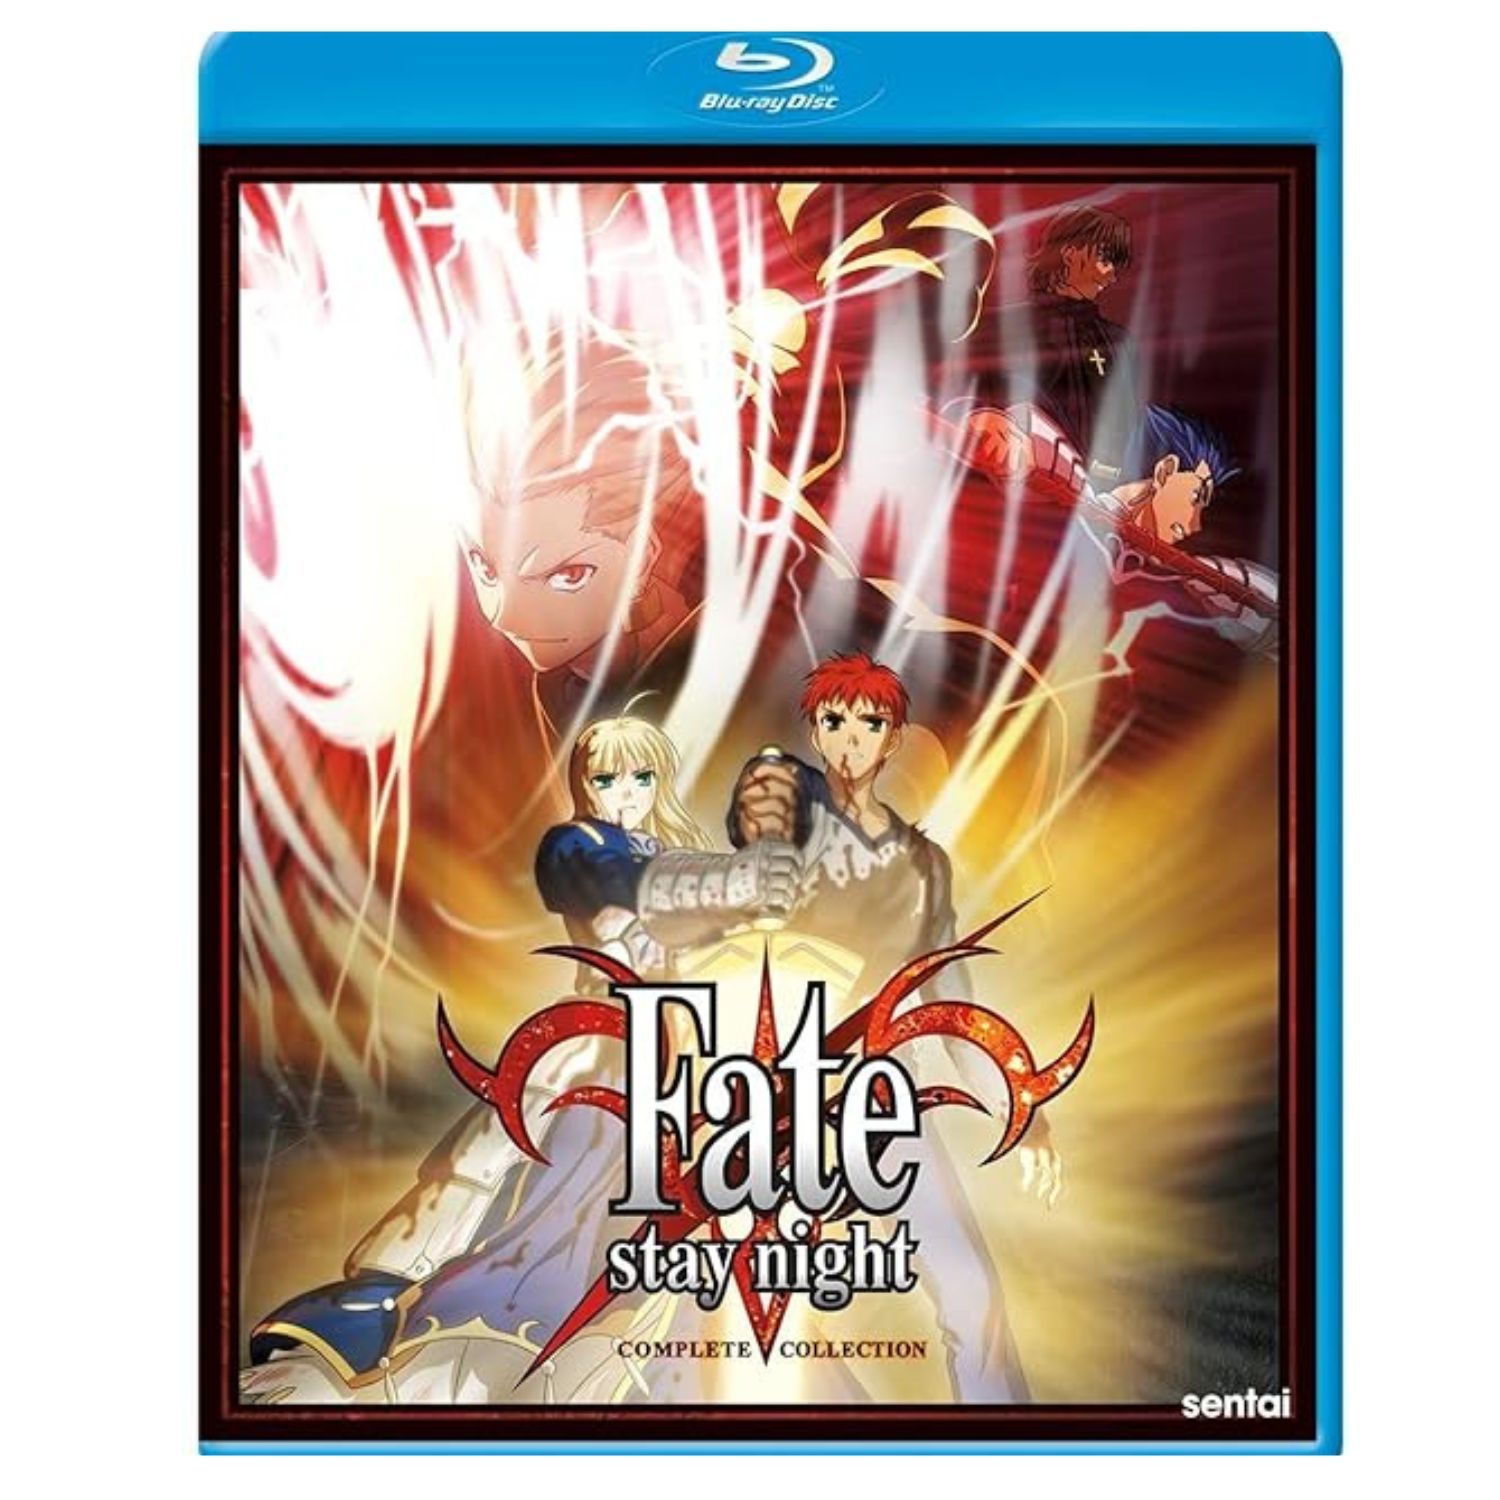 Fate Stay/Night on Blu-ray